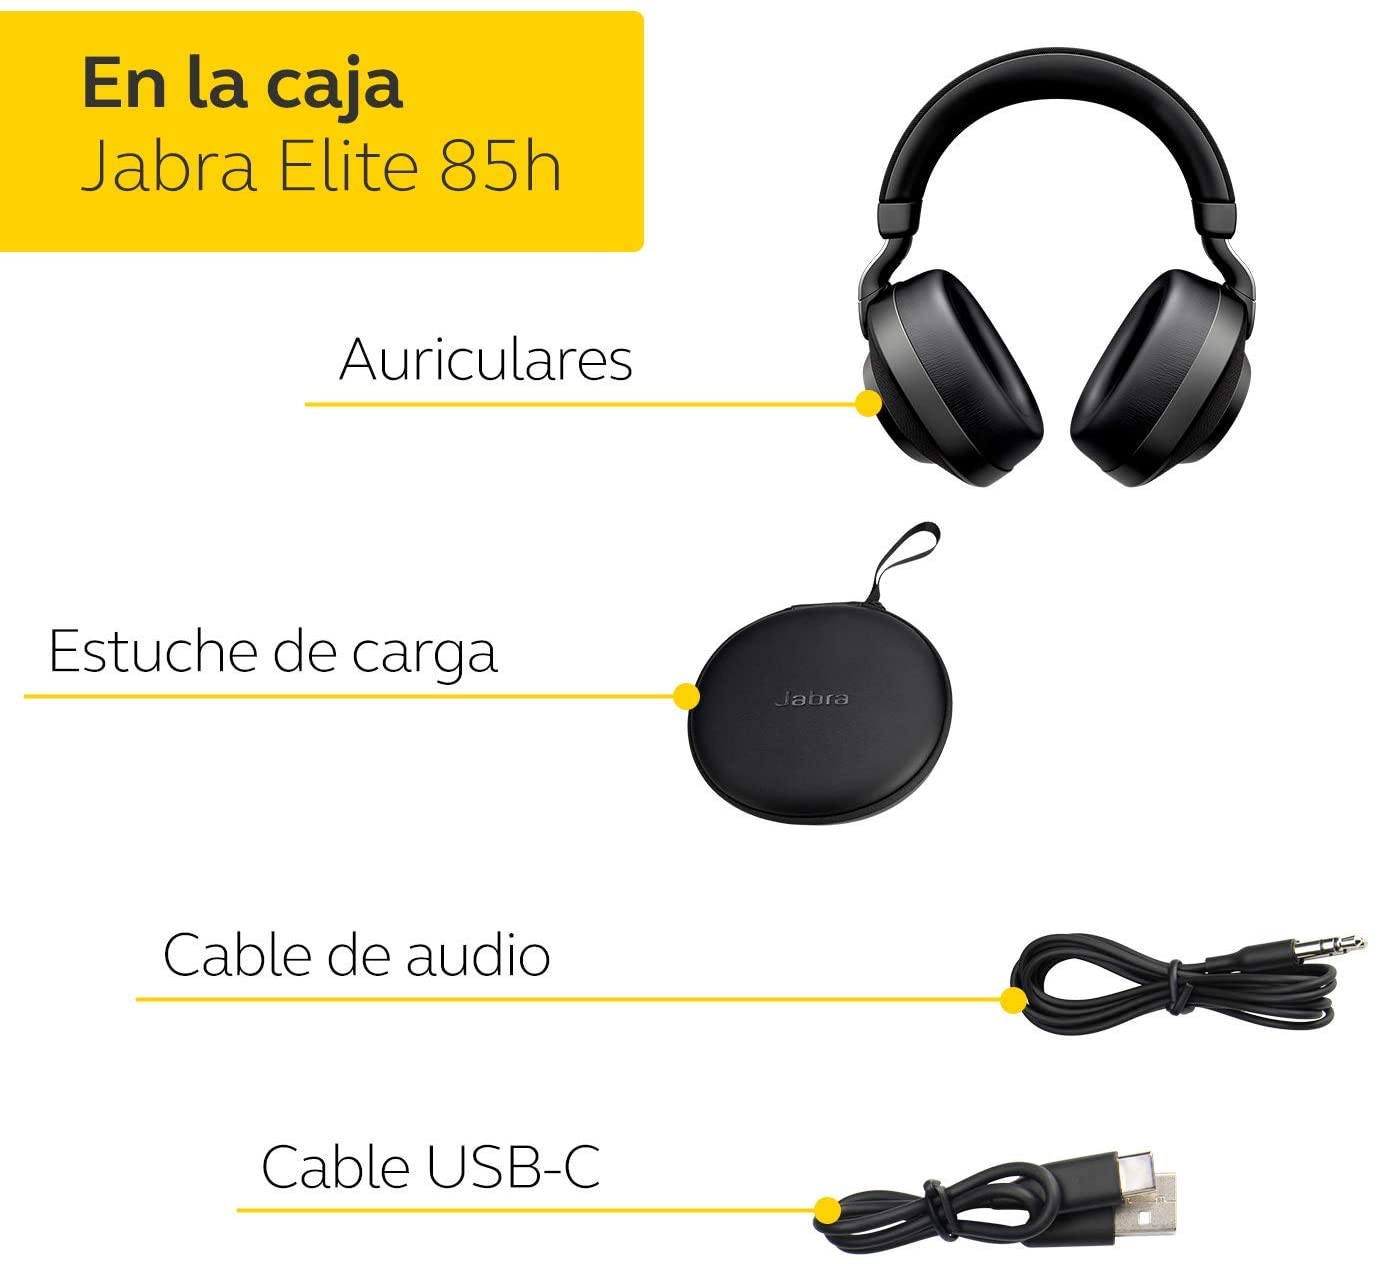 Jabra Elite 85h Over Ear Headphones with ANC and SmartSound Technology - Titanium Black